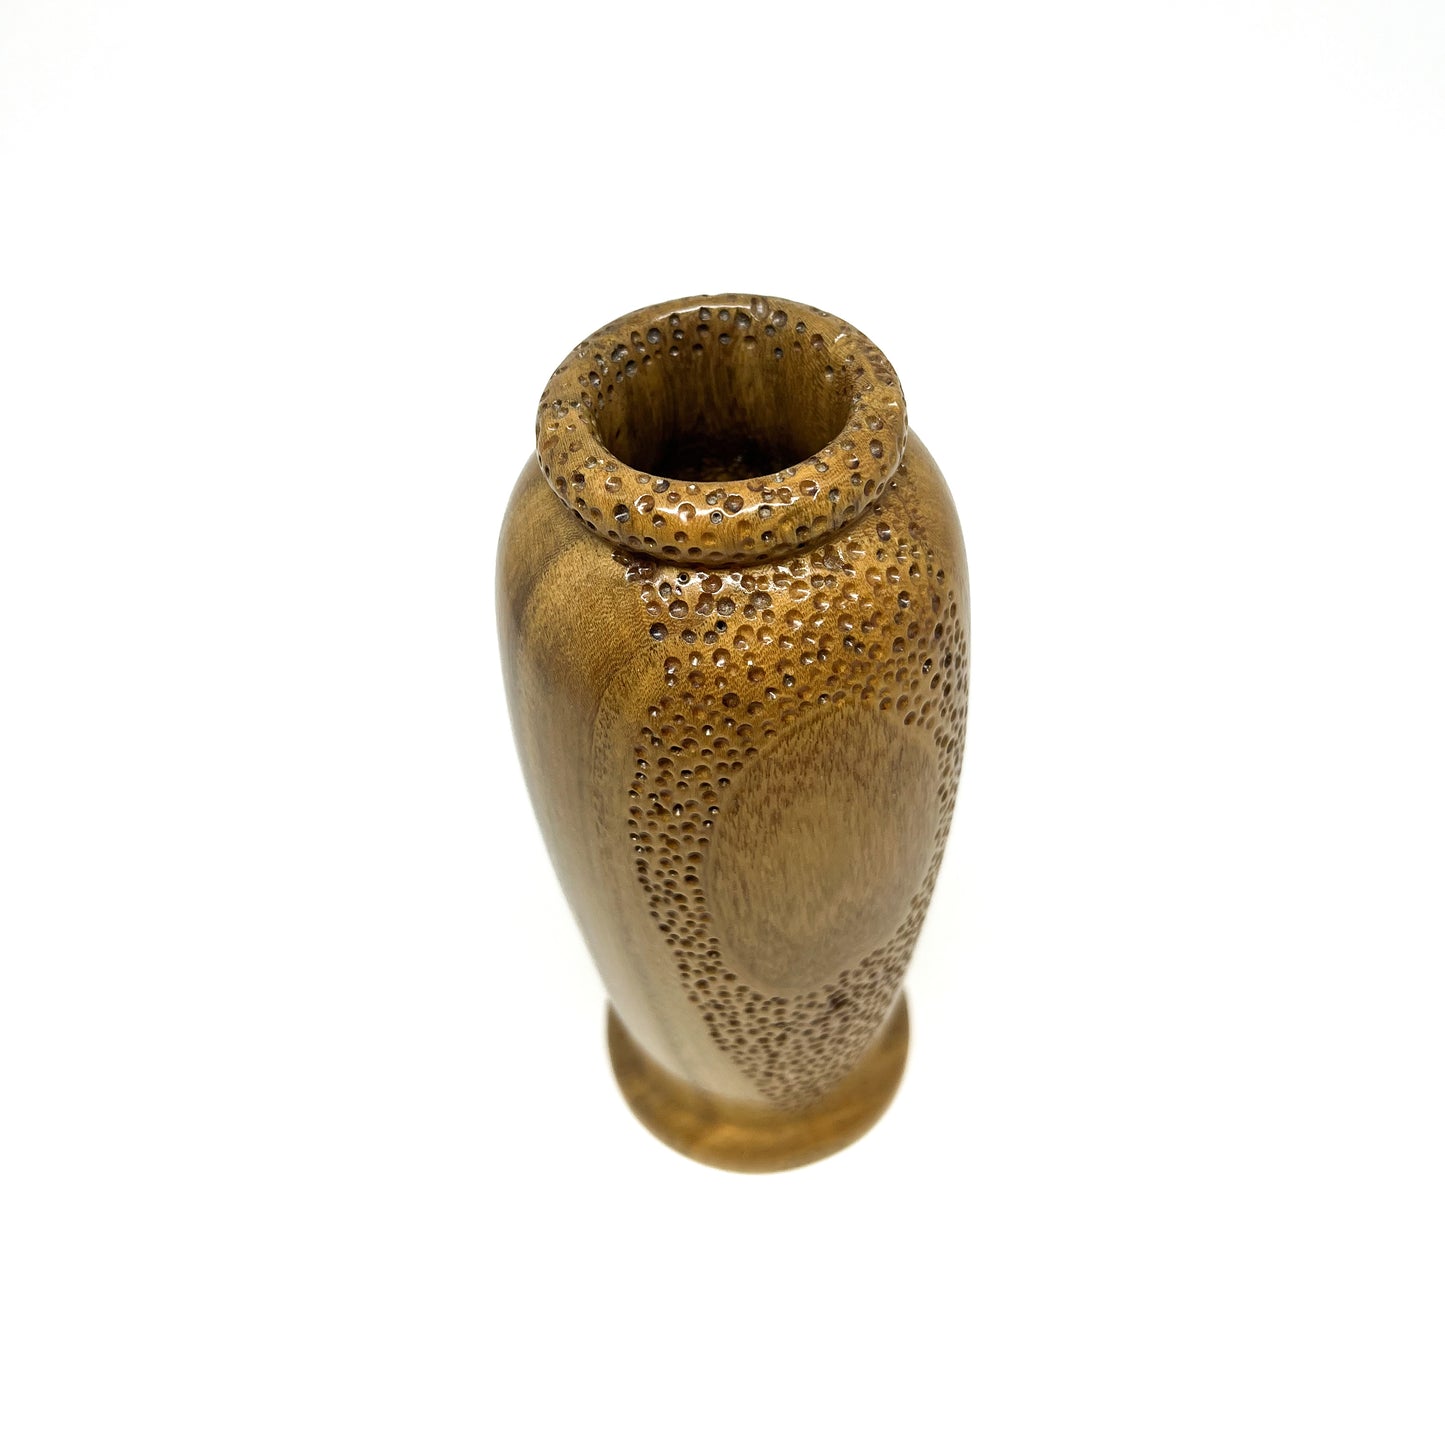 Small Textured Wood Vase